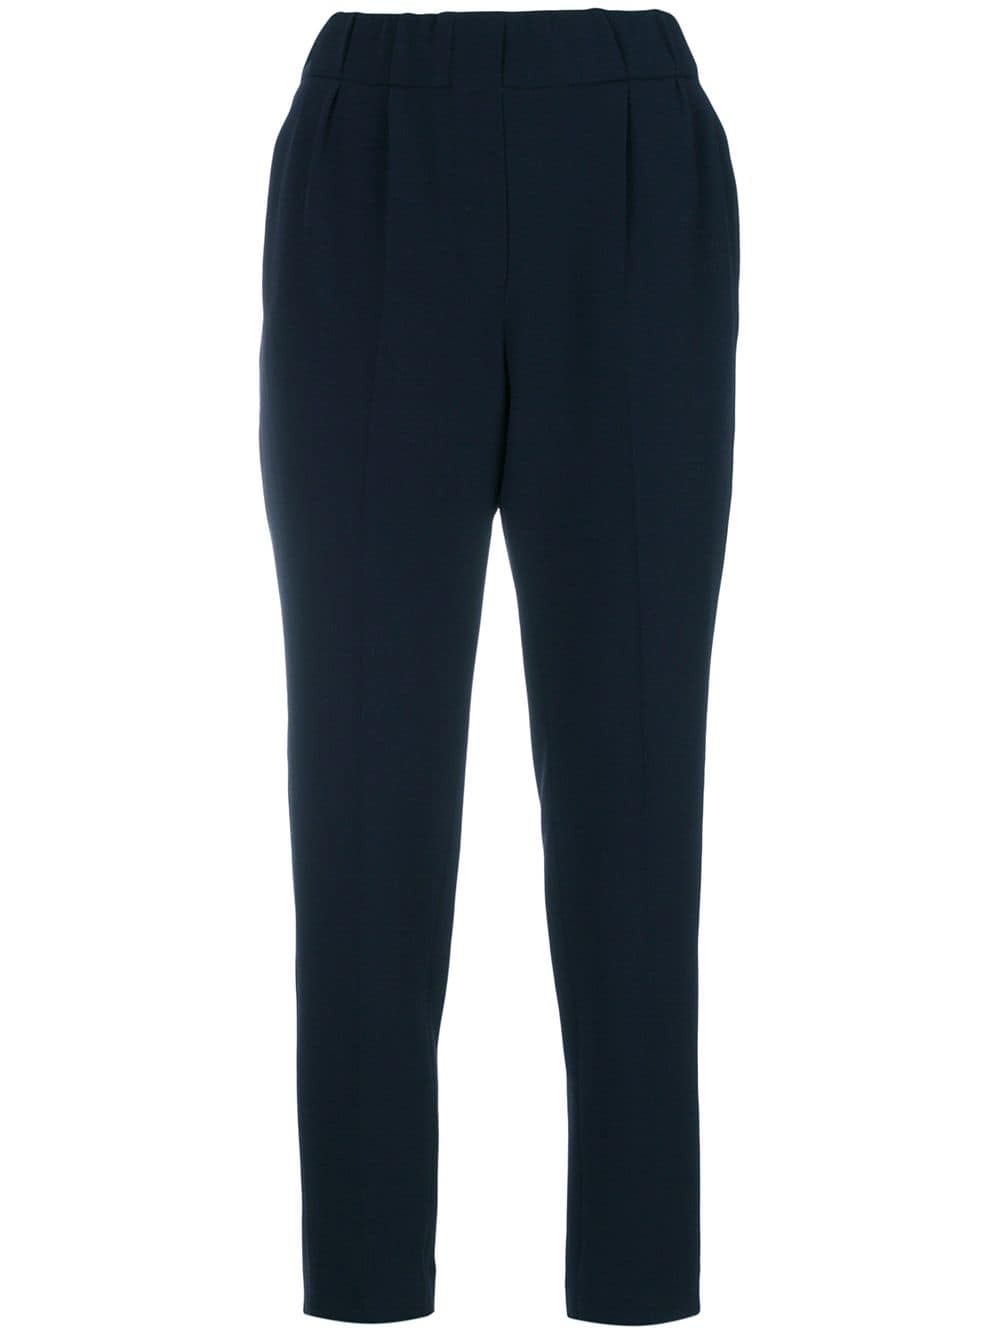 Pantalone Tailored Jogger in crêpe cady di seta e acetato – Blu navy